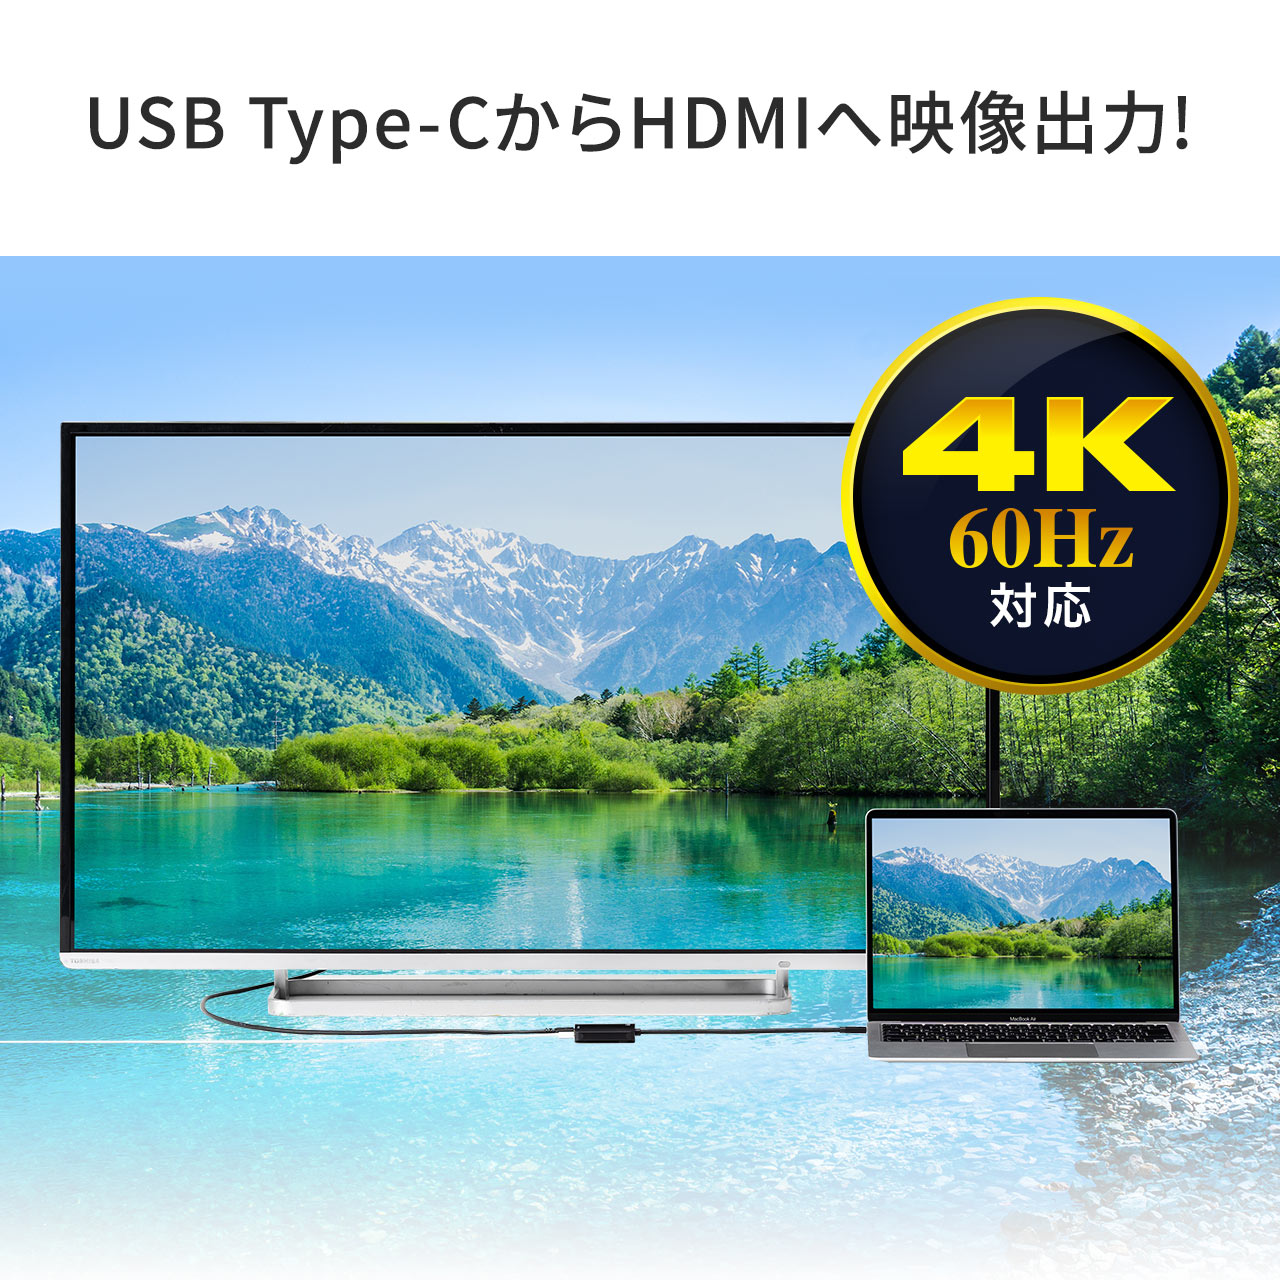 USB Type C-HDMI変換アダプタ 4K/60Hz HDR対応 PD100W ケーブル長20cm iPad Pro Air Nintendo Switch 有機ELモデル対応 ブラック 500-KC038